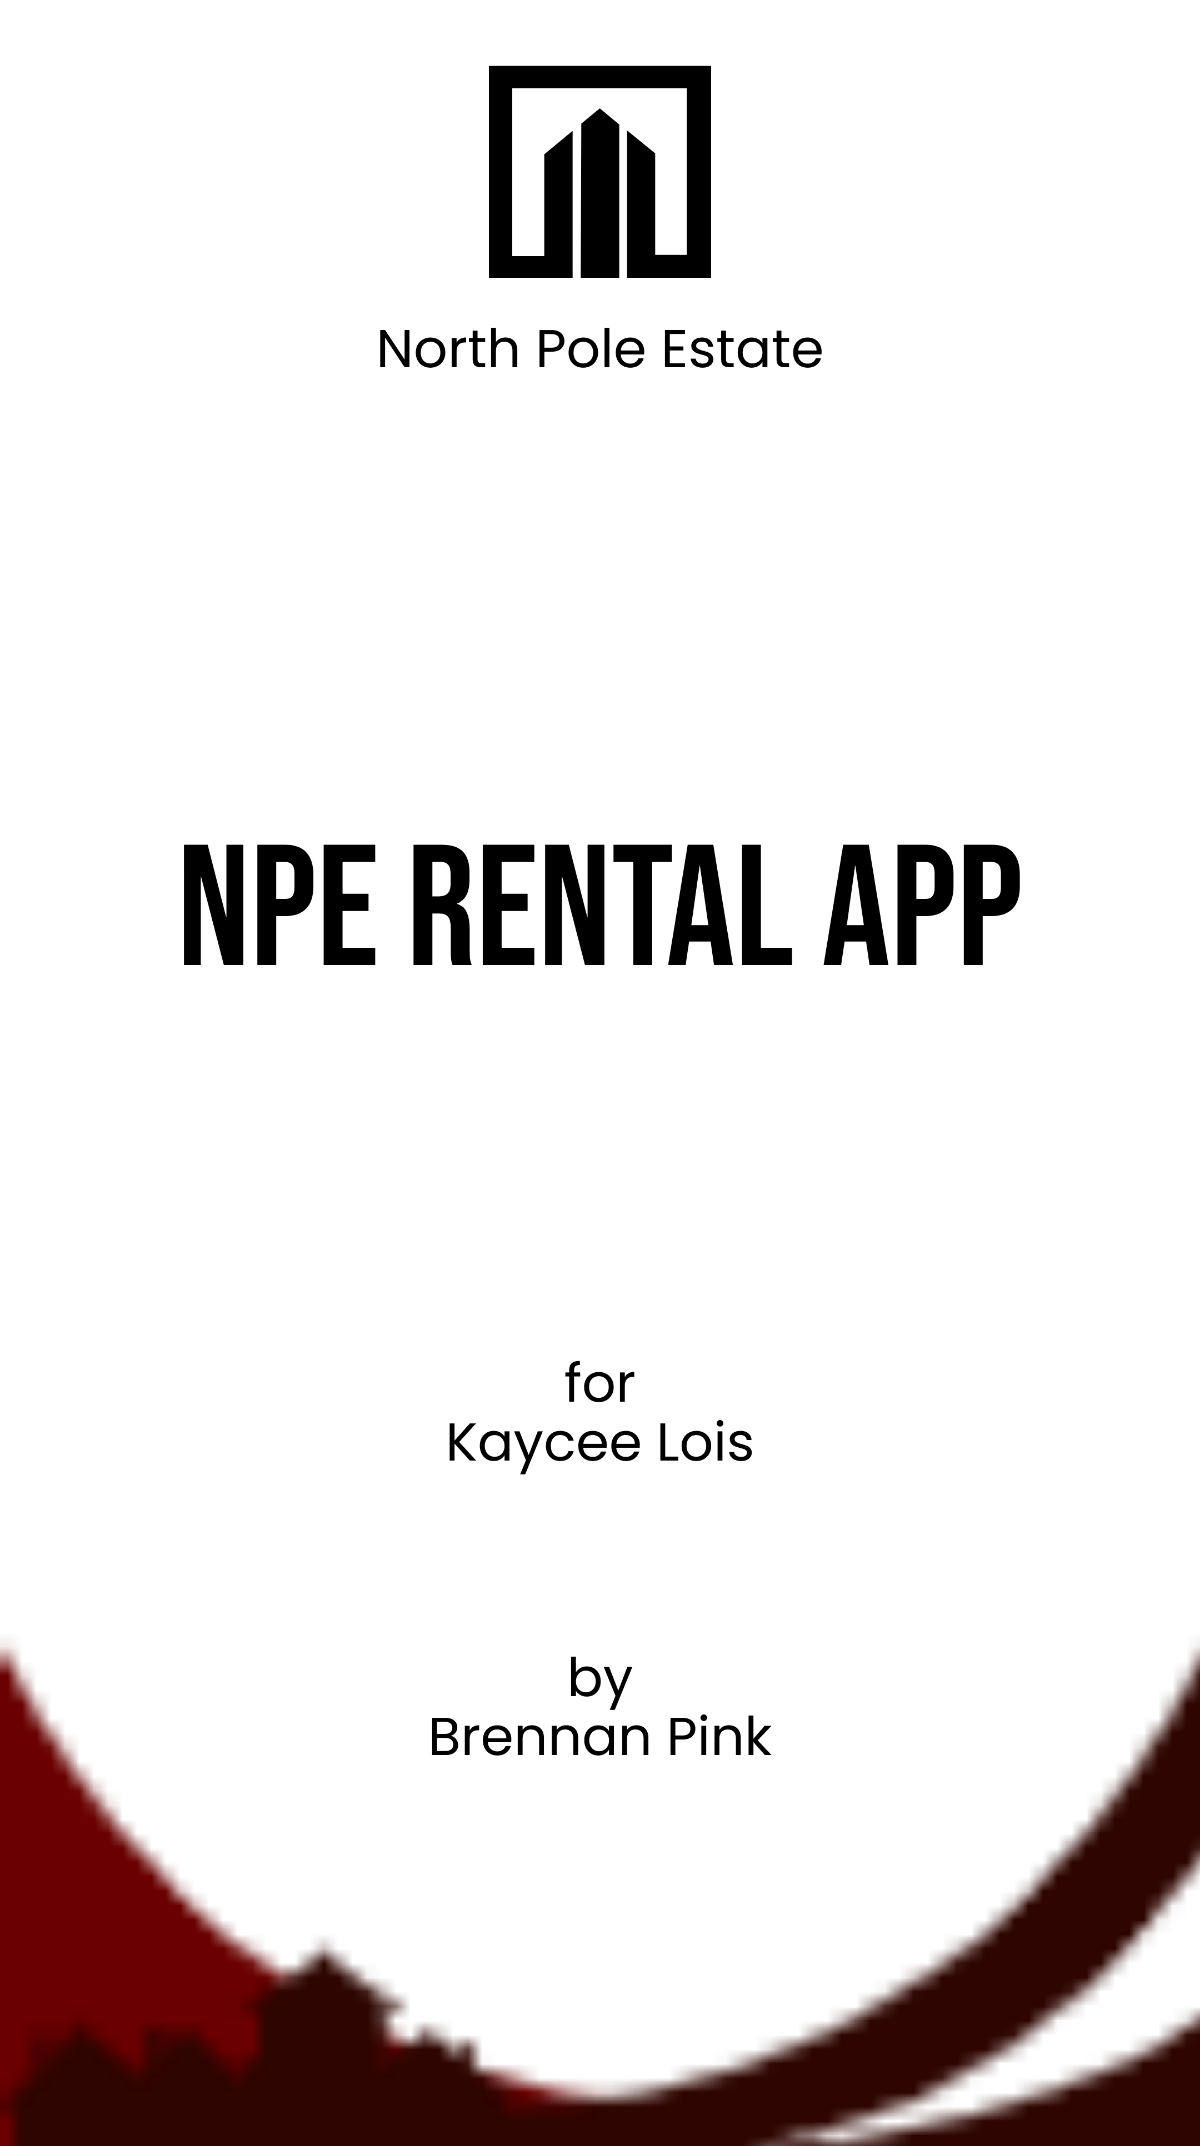 Free Rental App Promotion Mobile Presentation Template